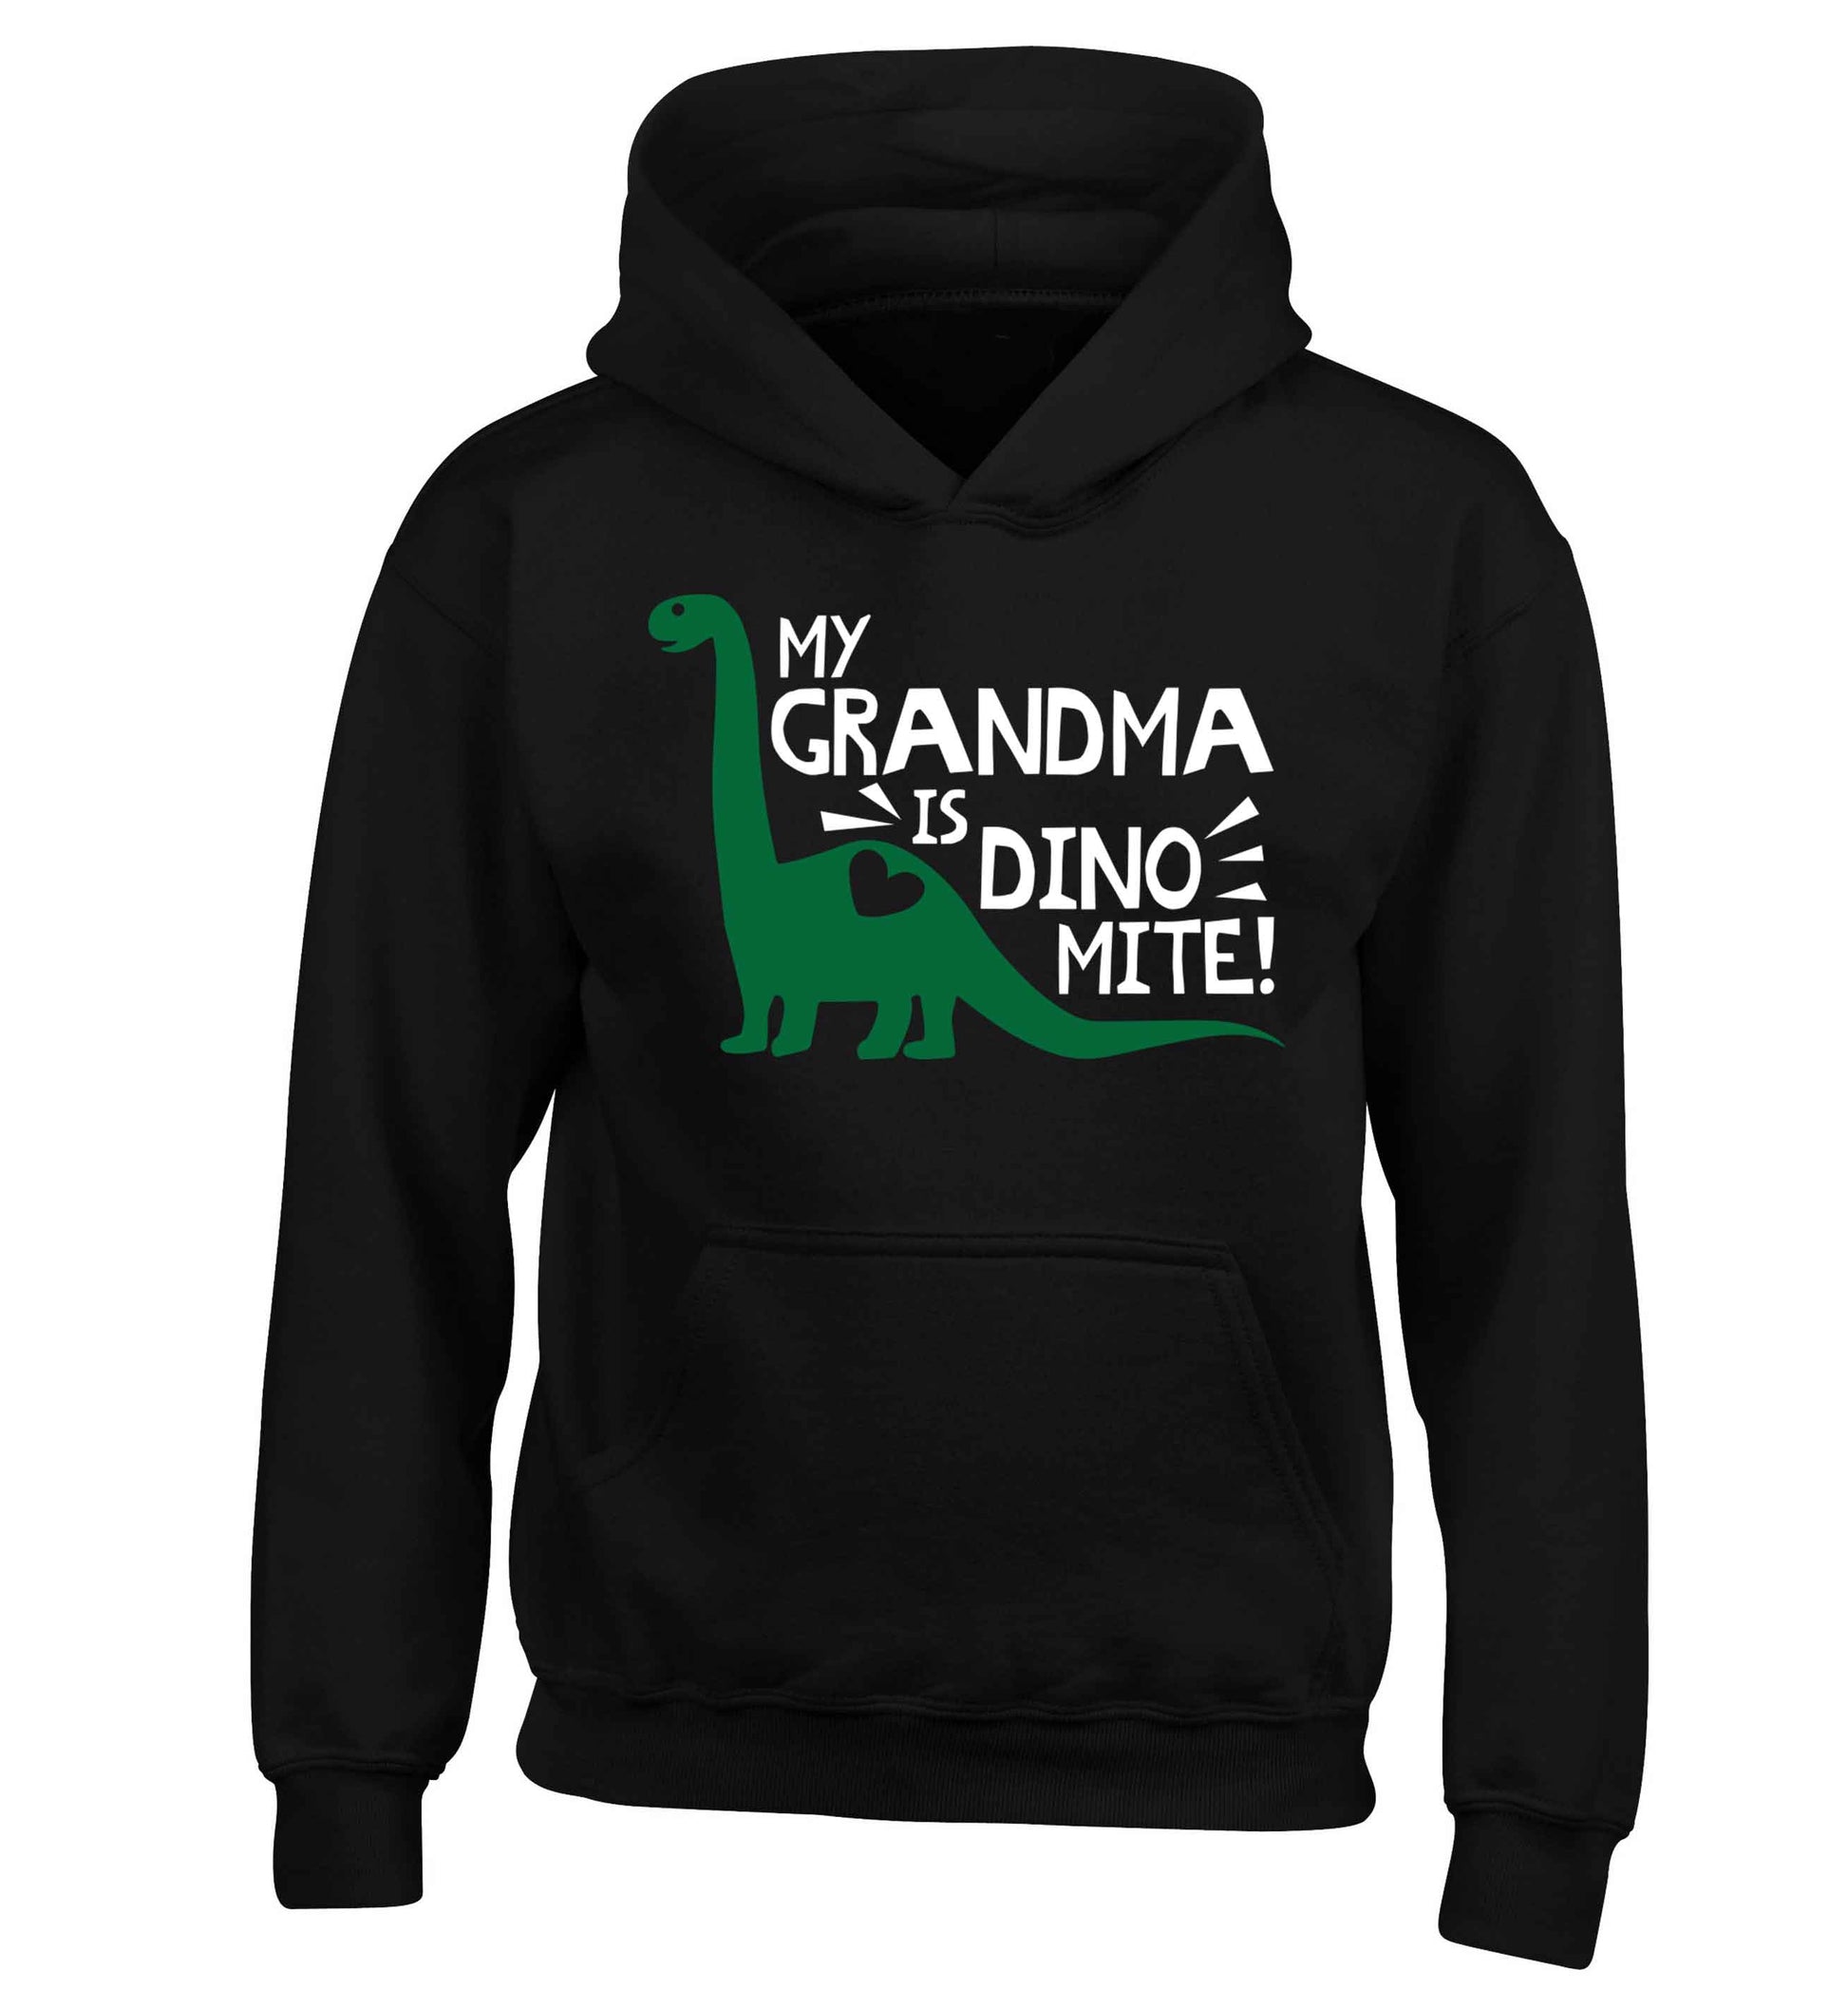 My grandma is dinomite! children's black hoodie 12-13 Years